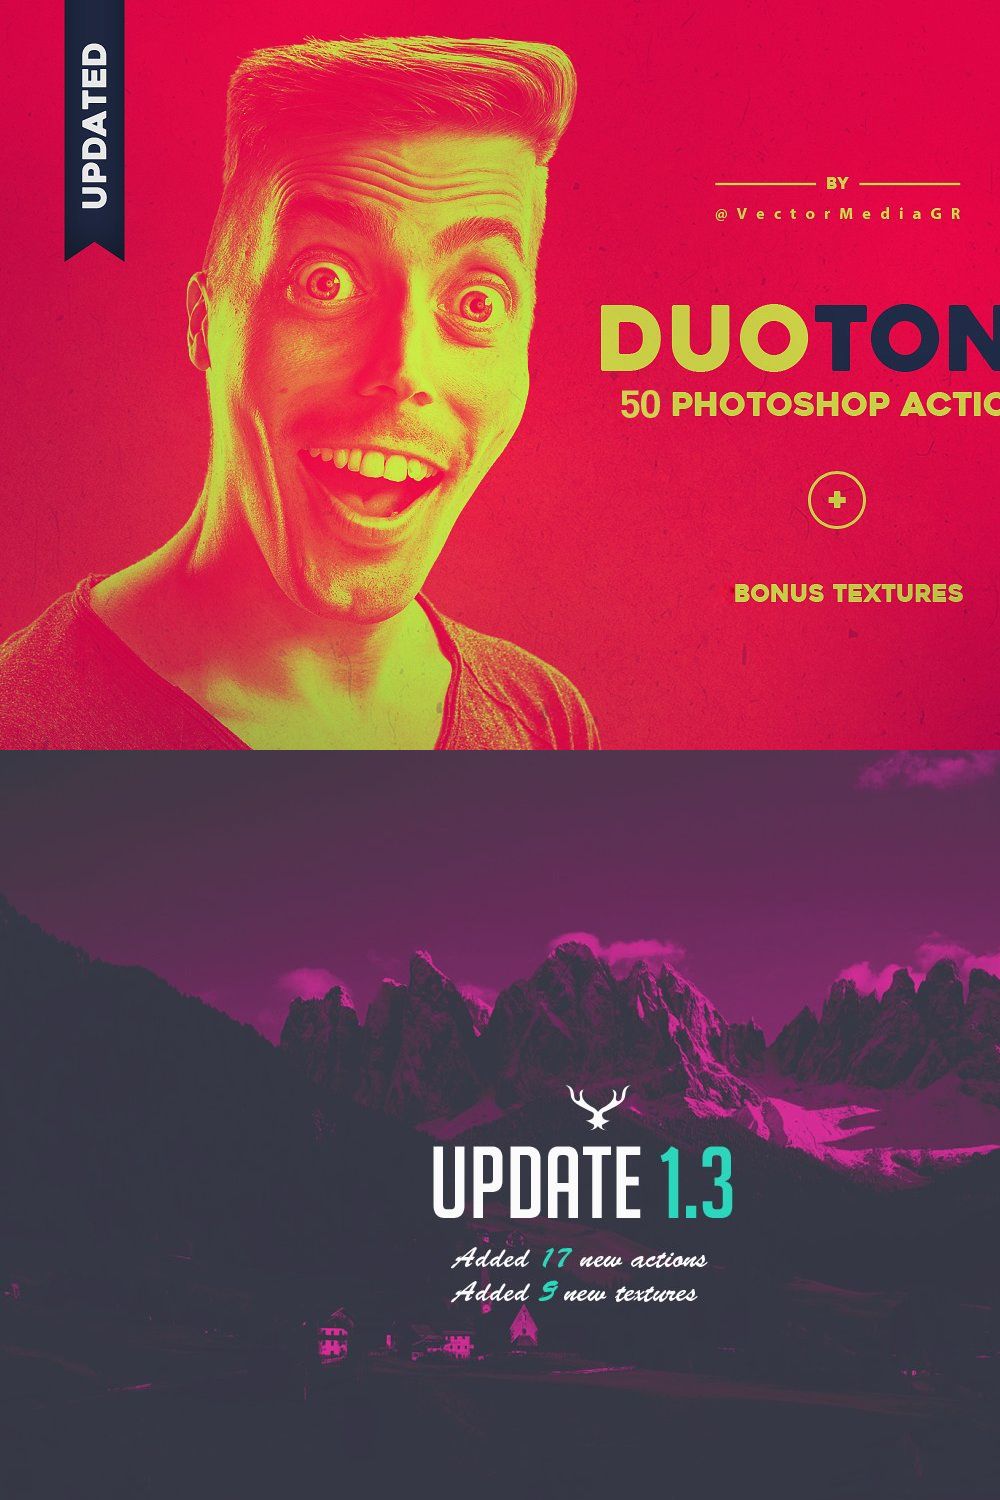 Duotone Photoshop Actions & Textures pinterest preview image.